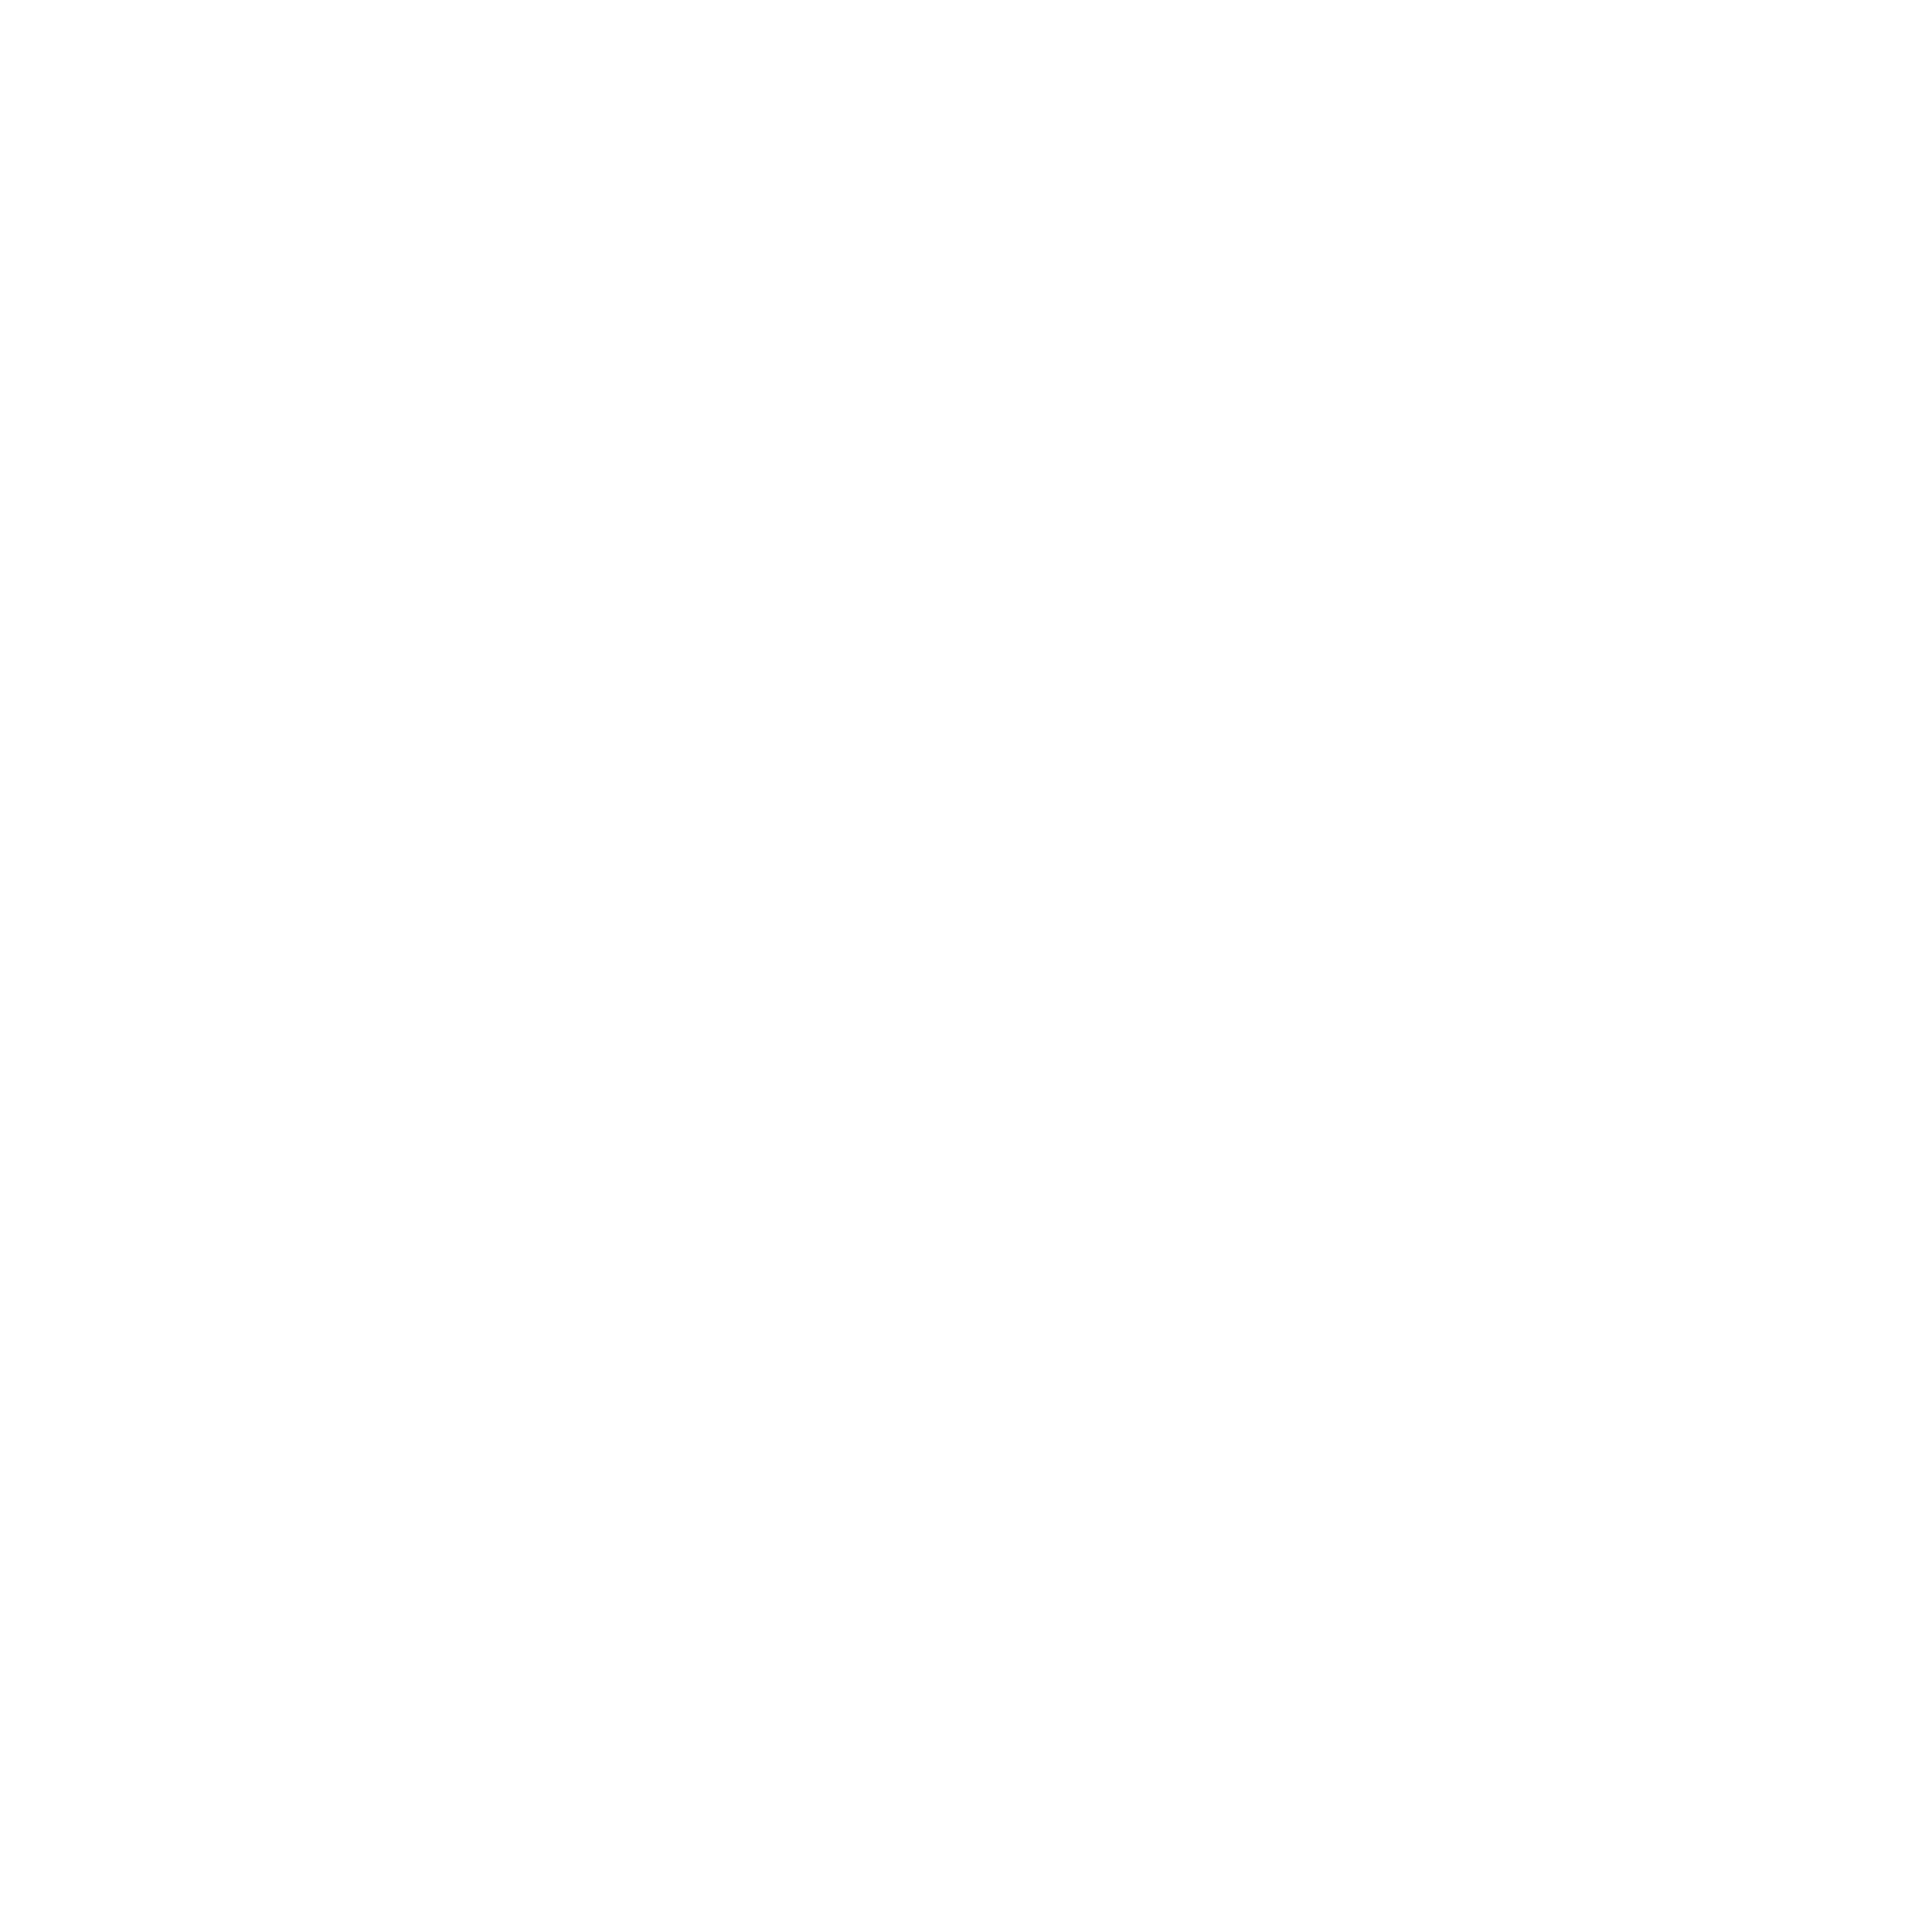 GoToMyPC Logo - GoToMyPC Logo PNG Transparent & SVG Vector - Freebie Supply